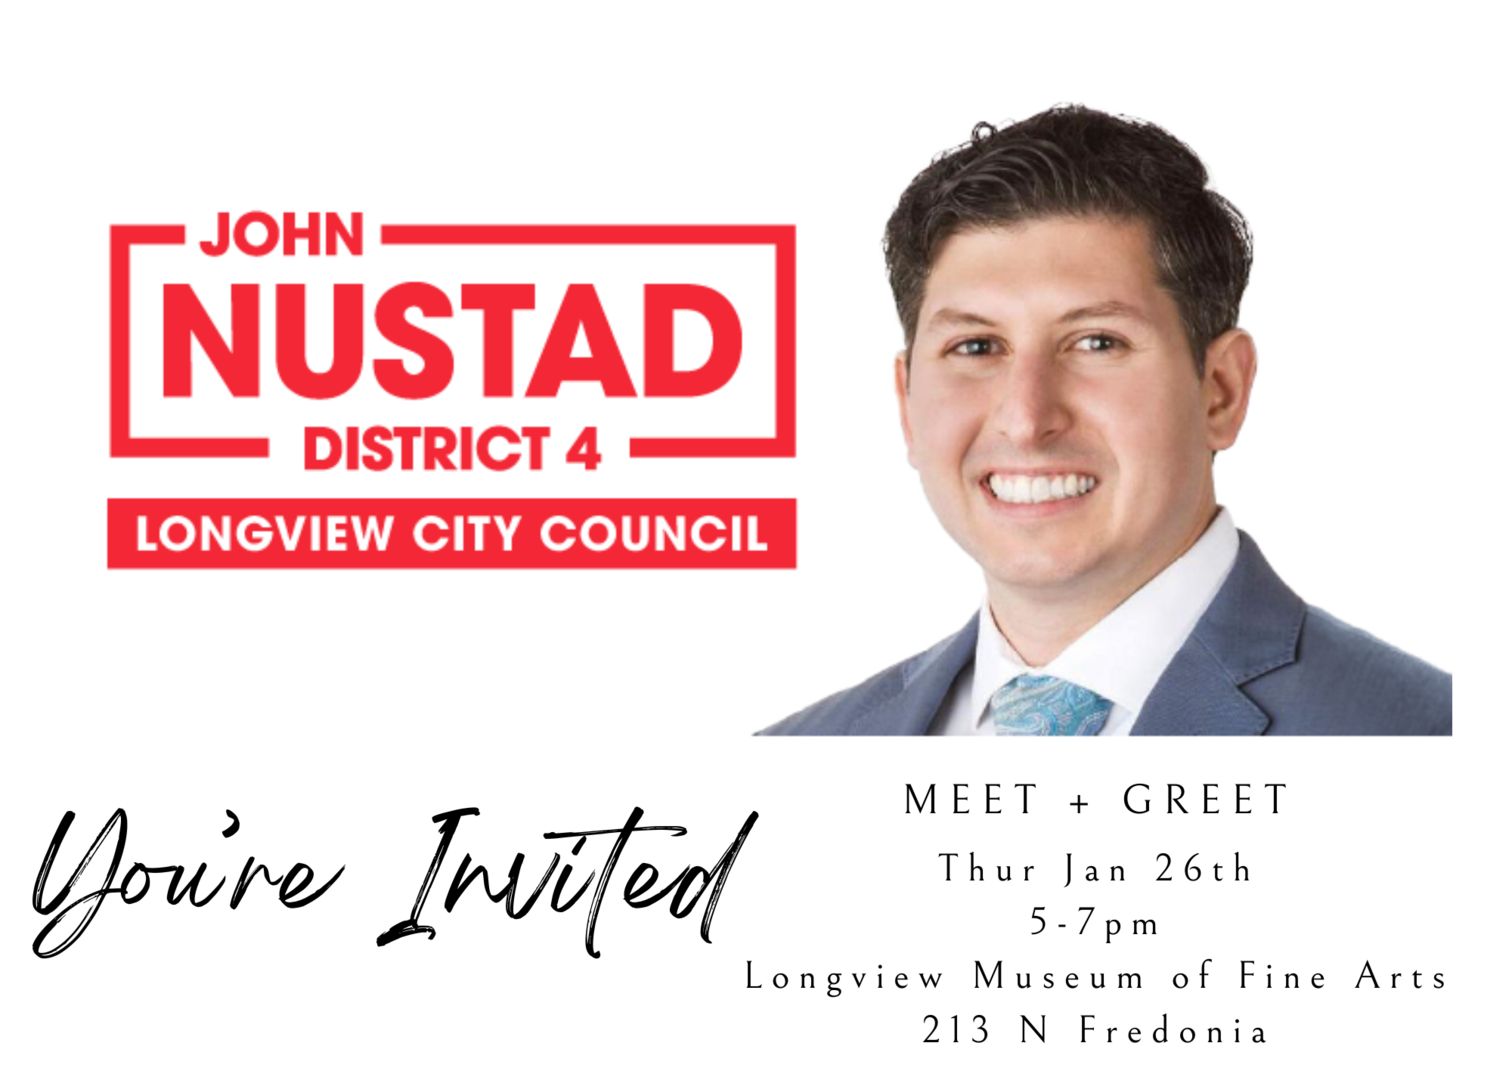 John Nustad for City Council District 4 Meet + Greet, Longview, Texas, United States